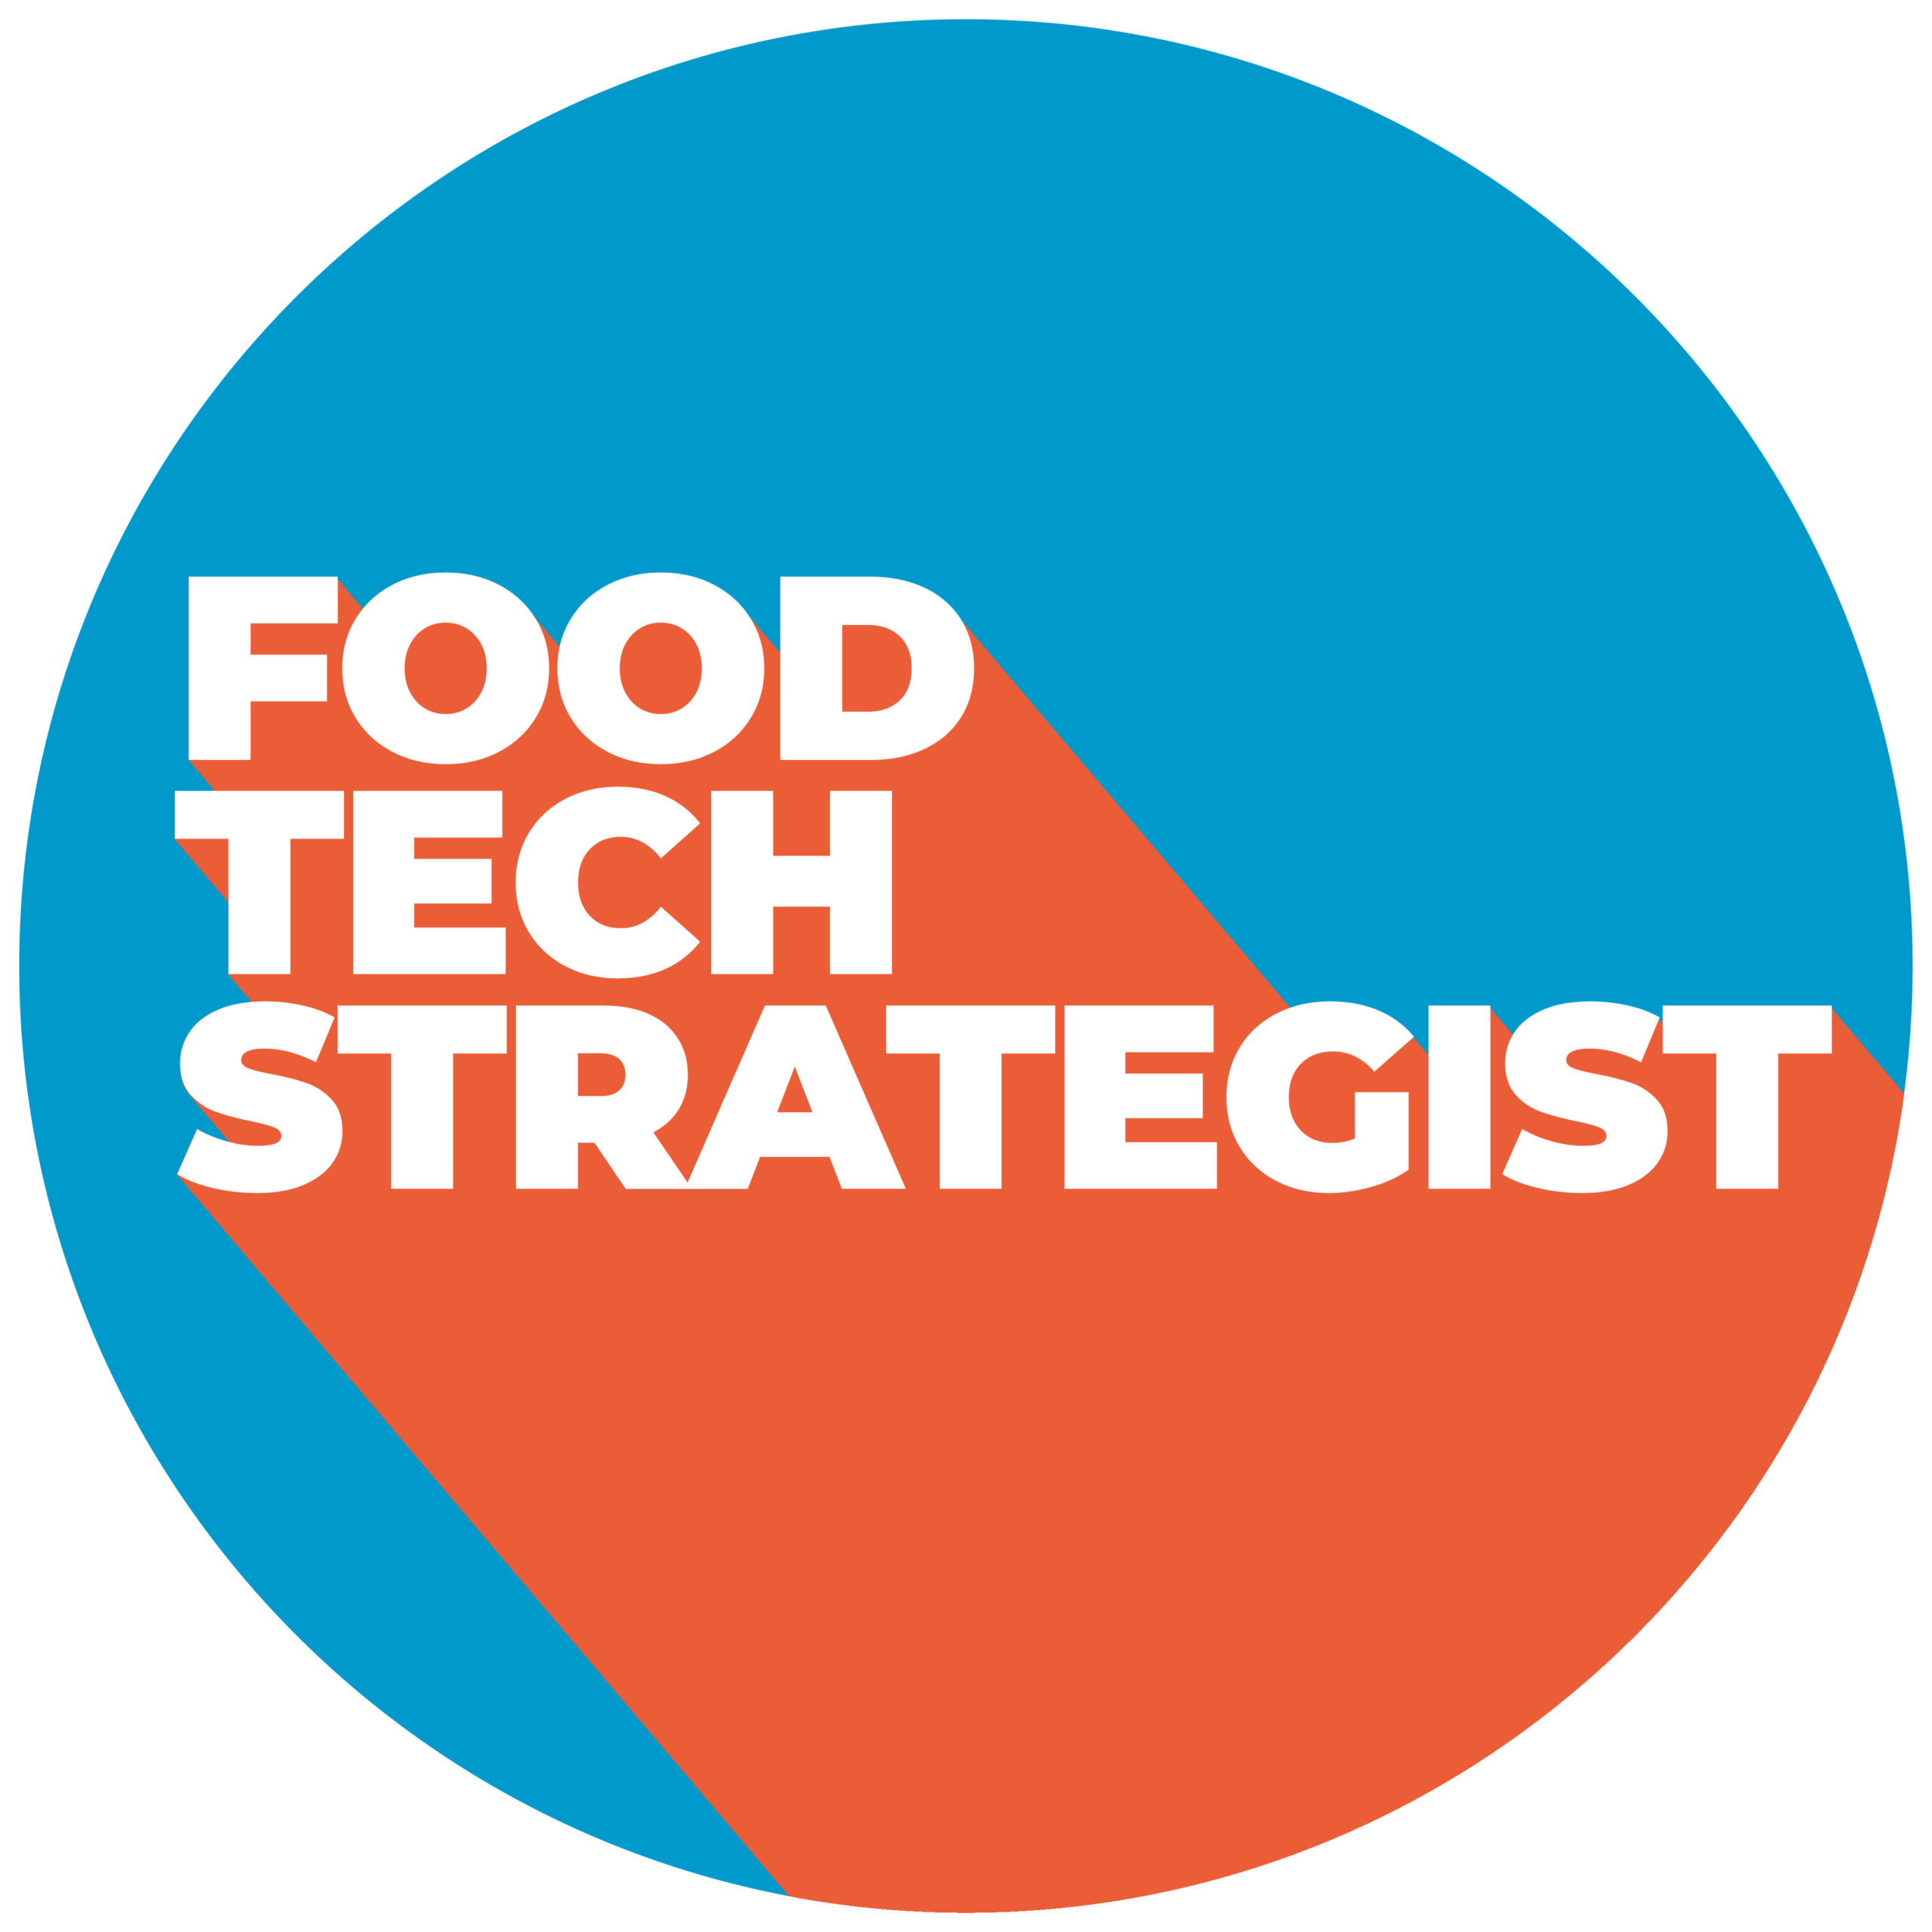 Food Tech Strategist